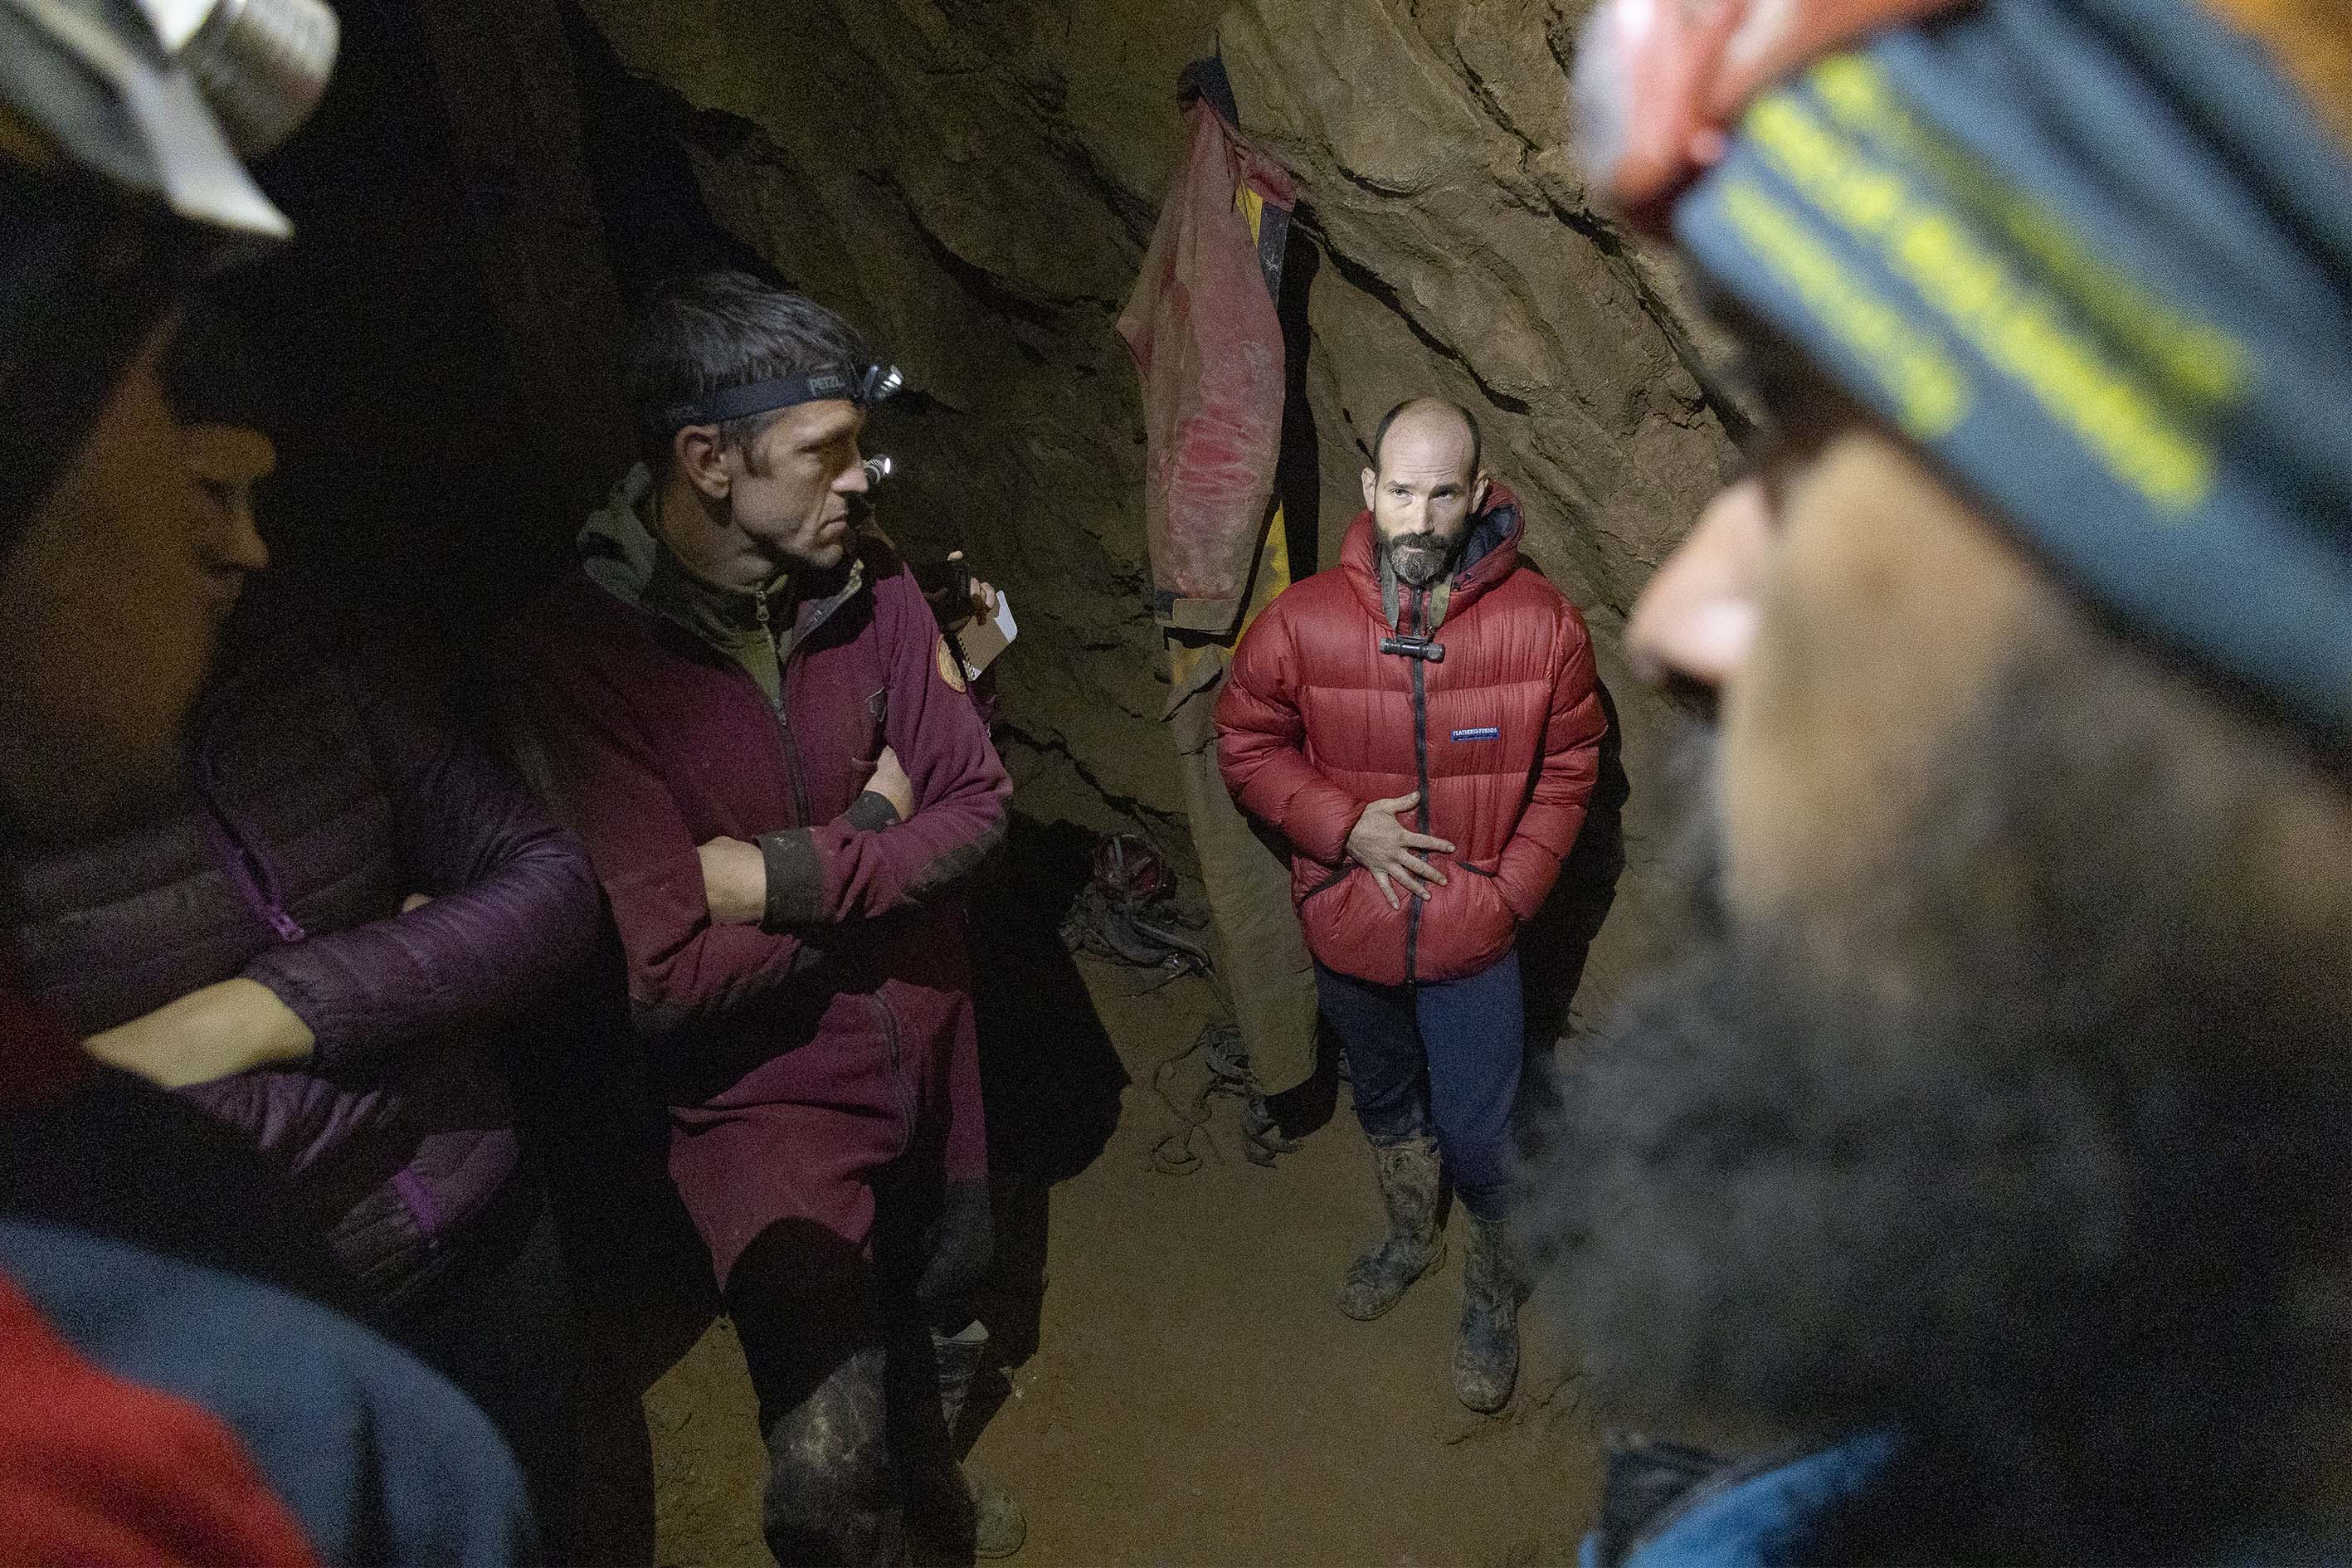 Magyar Barlangi Mentőszolgálat Cave Rescue Turkey Caverescue Hungarian Cave Rescue Service ECRA 